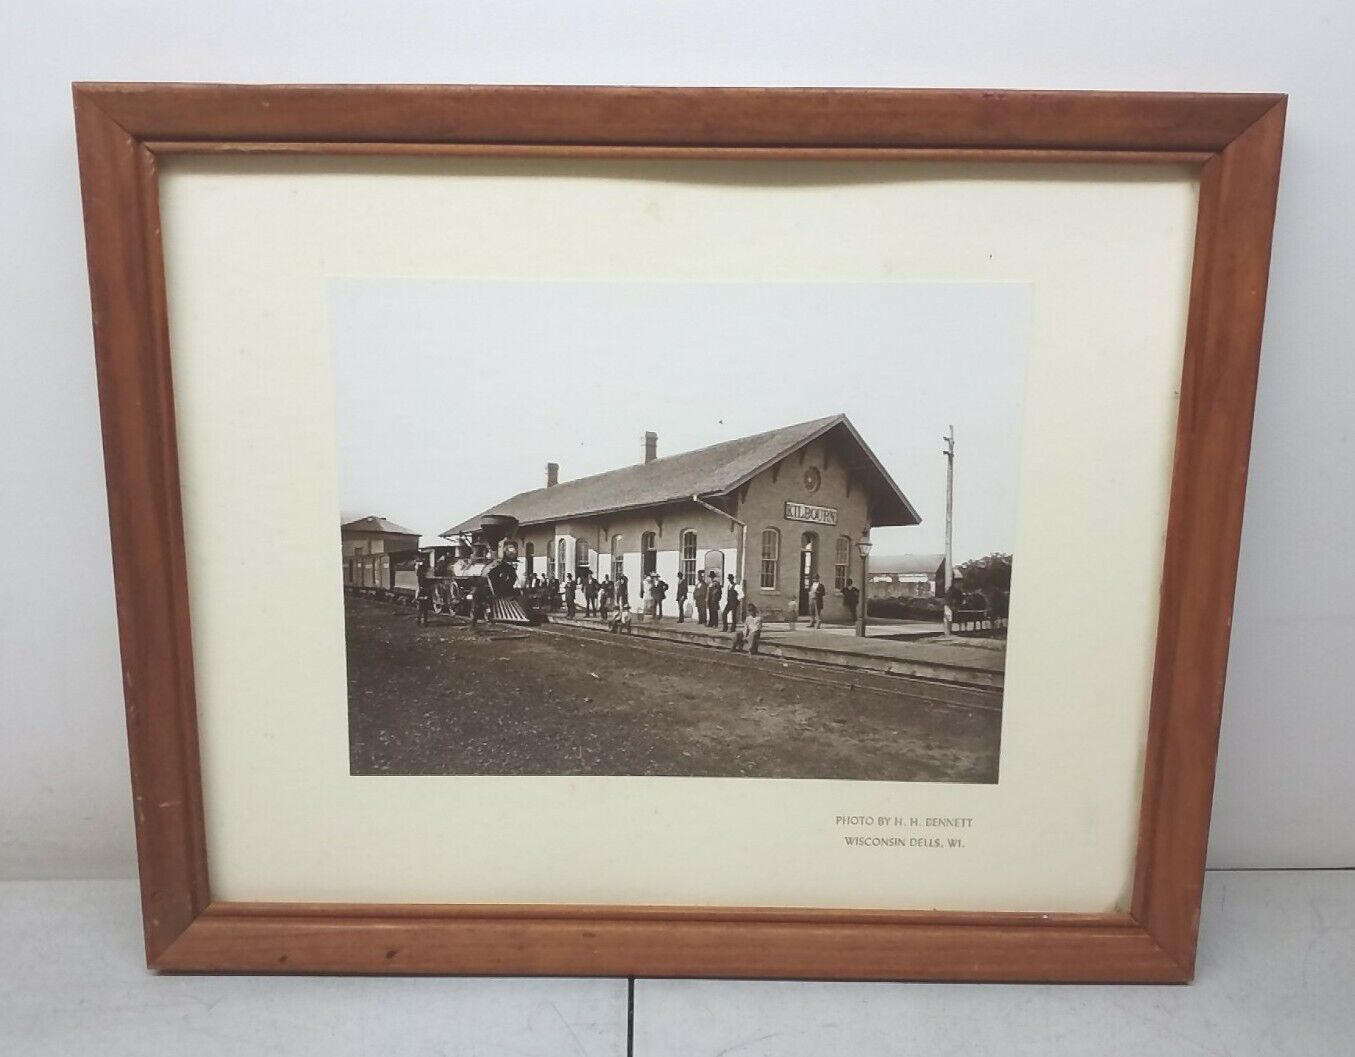 HH Bennett Studio Certified Framed Photograph Kilbourn Station Wisconsin Dells